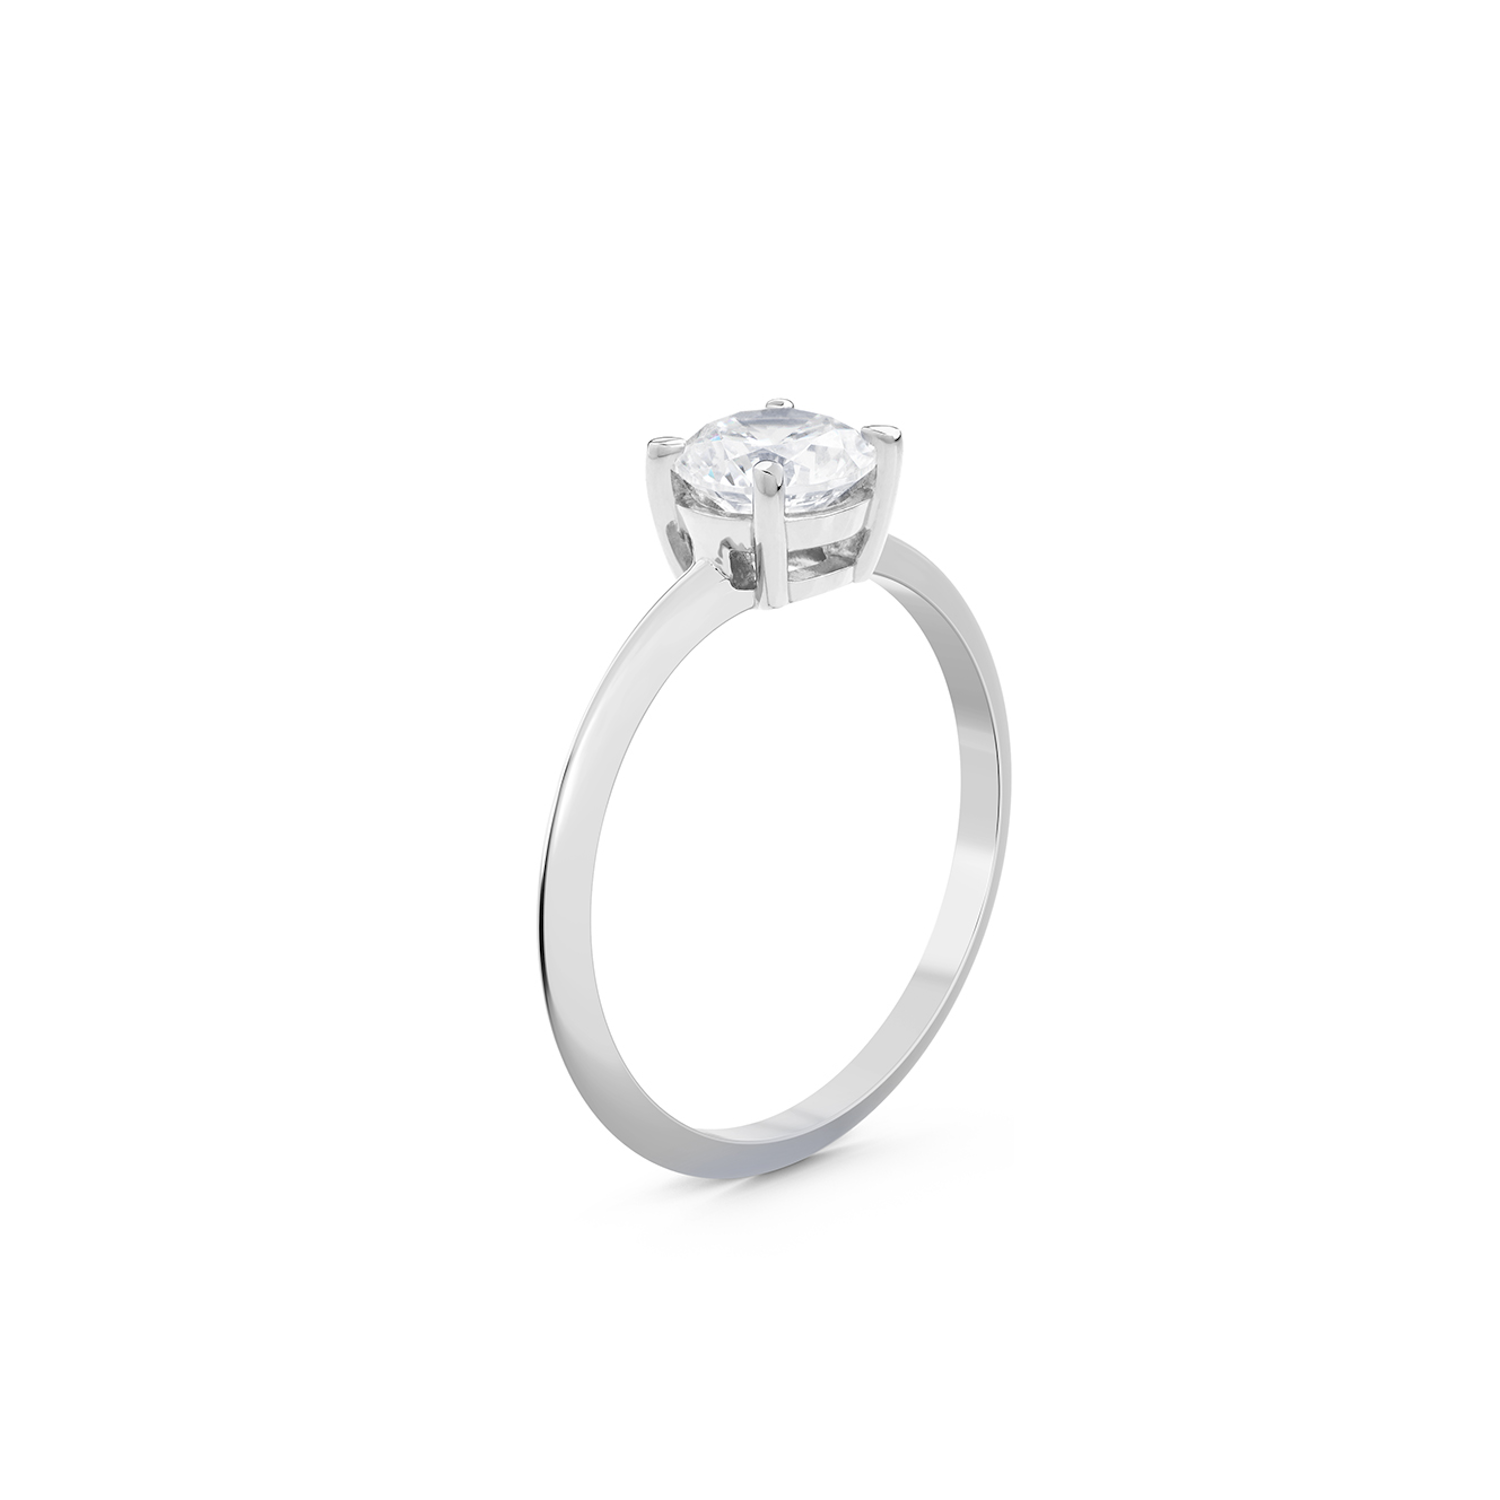 Coeur Diamond Solitaire Ring. 18k White Gold or Platinum - MONARC CONCIERGE